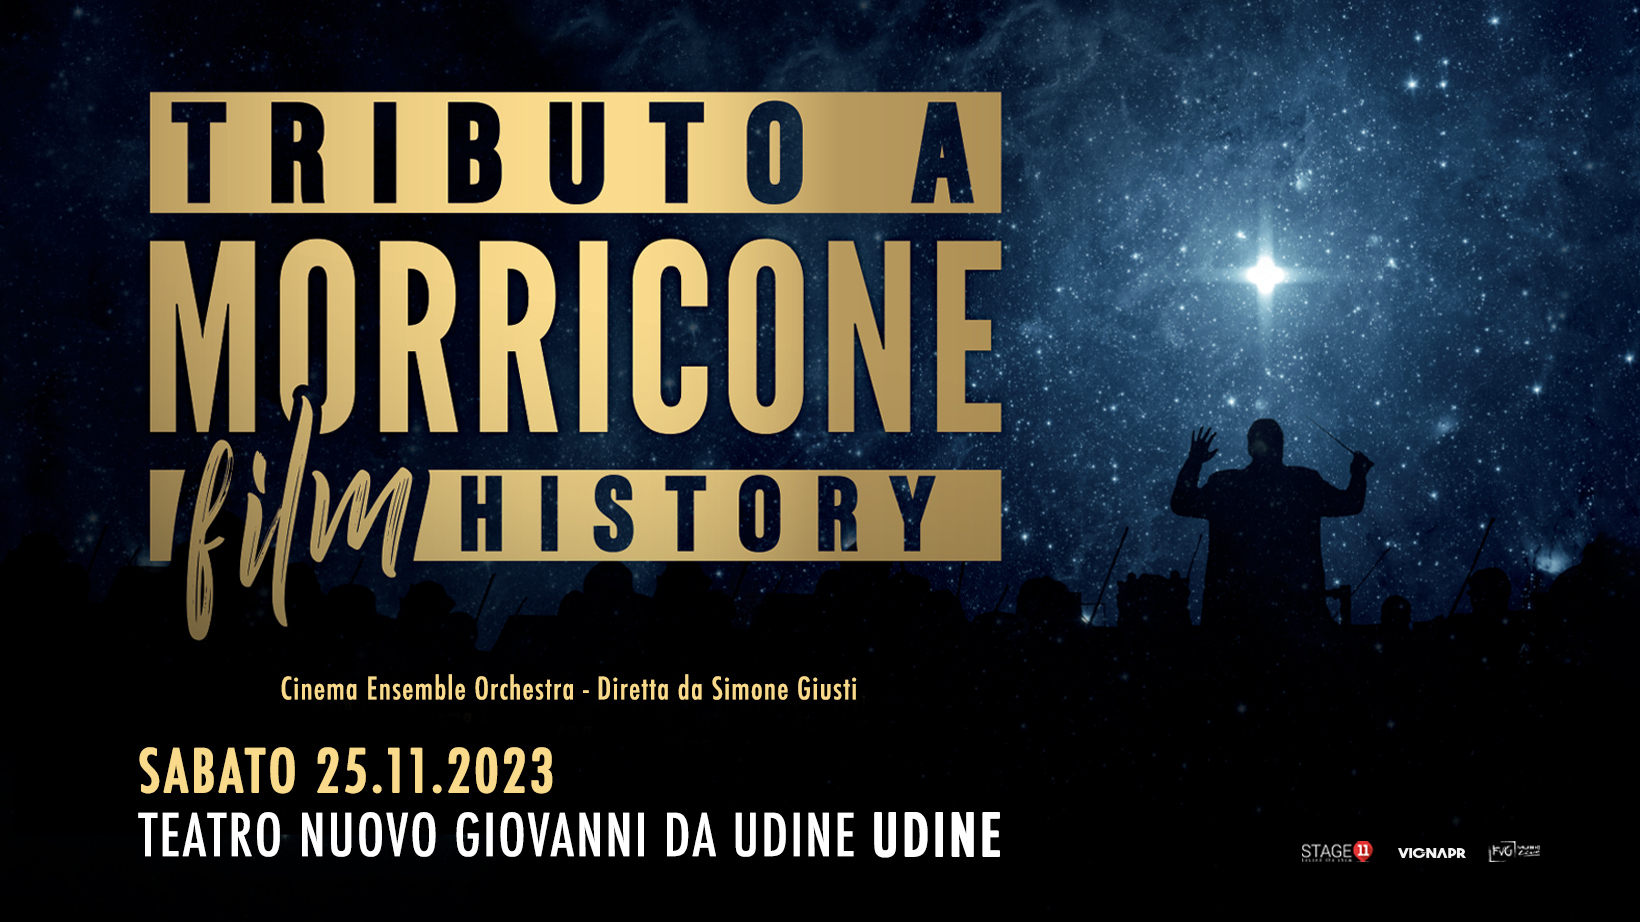 Morricone Film History